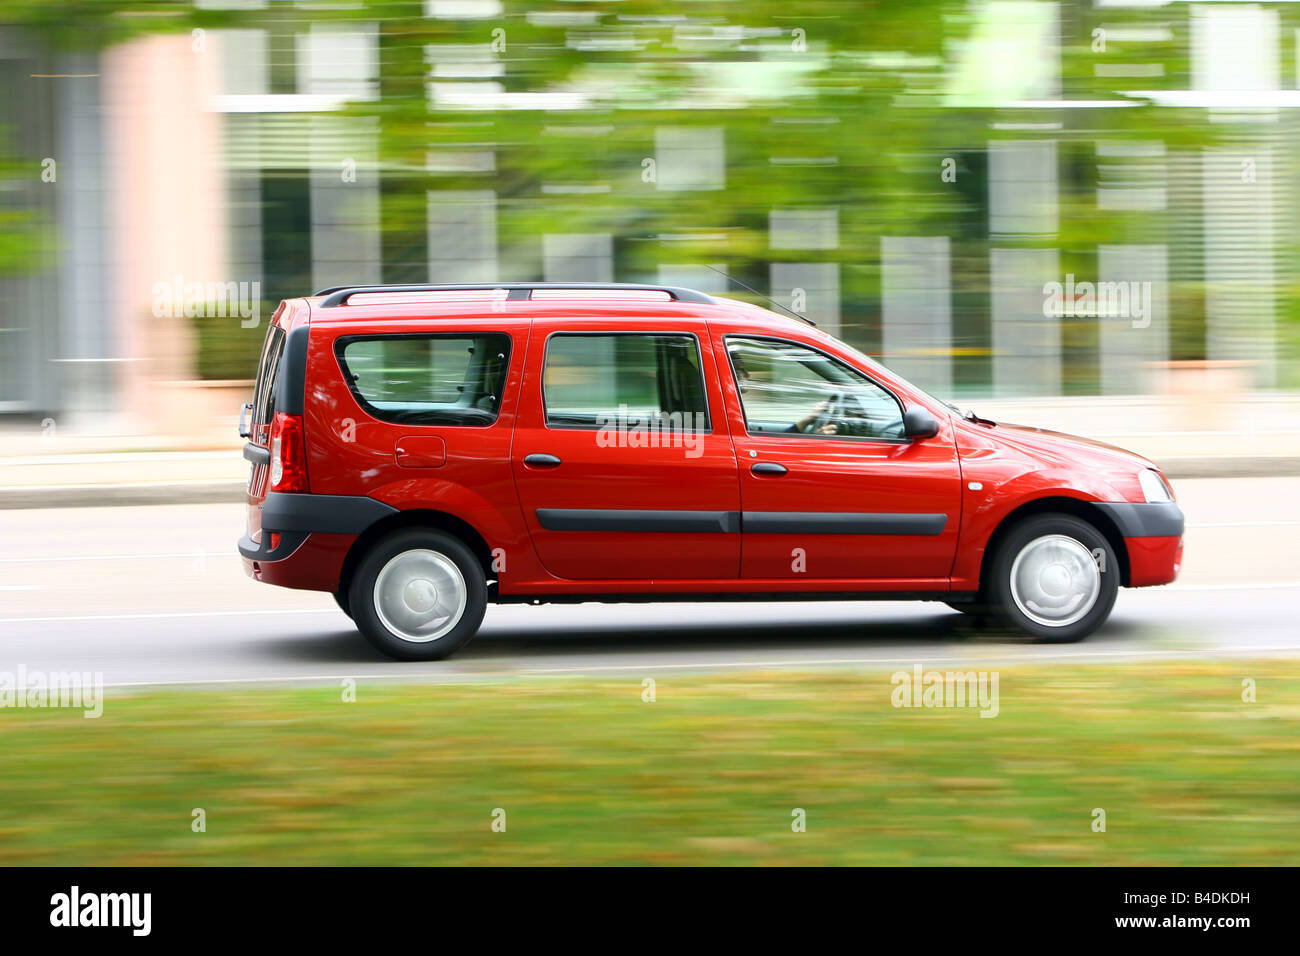 Dacia logan mcv hi-res stock photography and images - Alamy